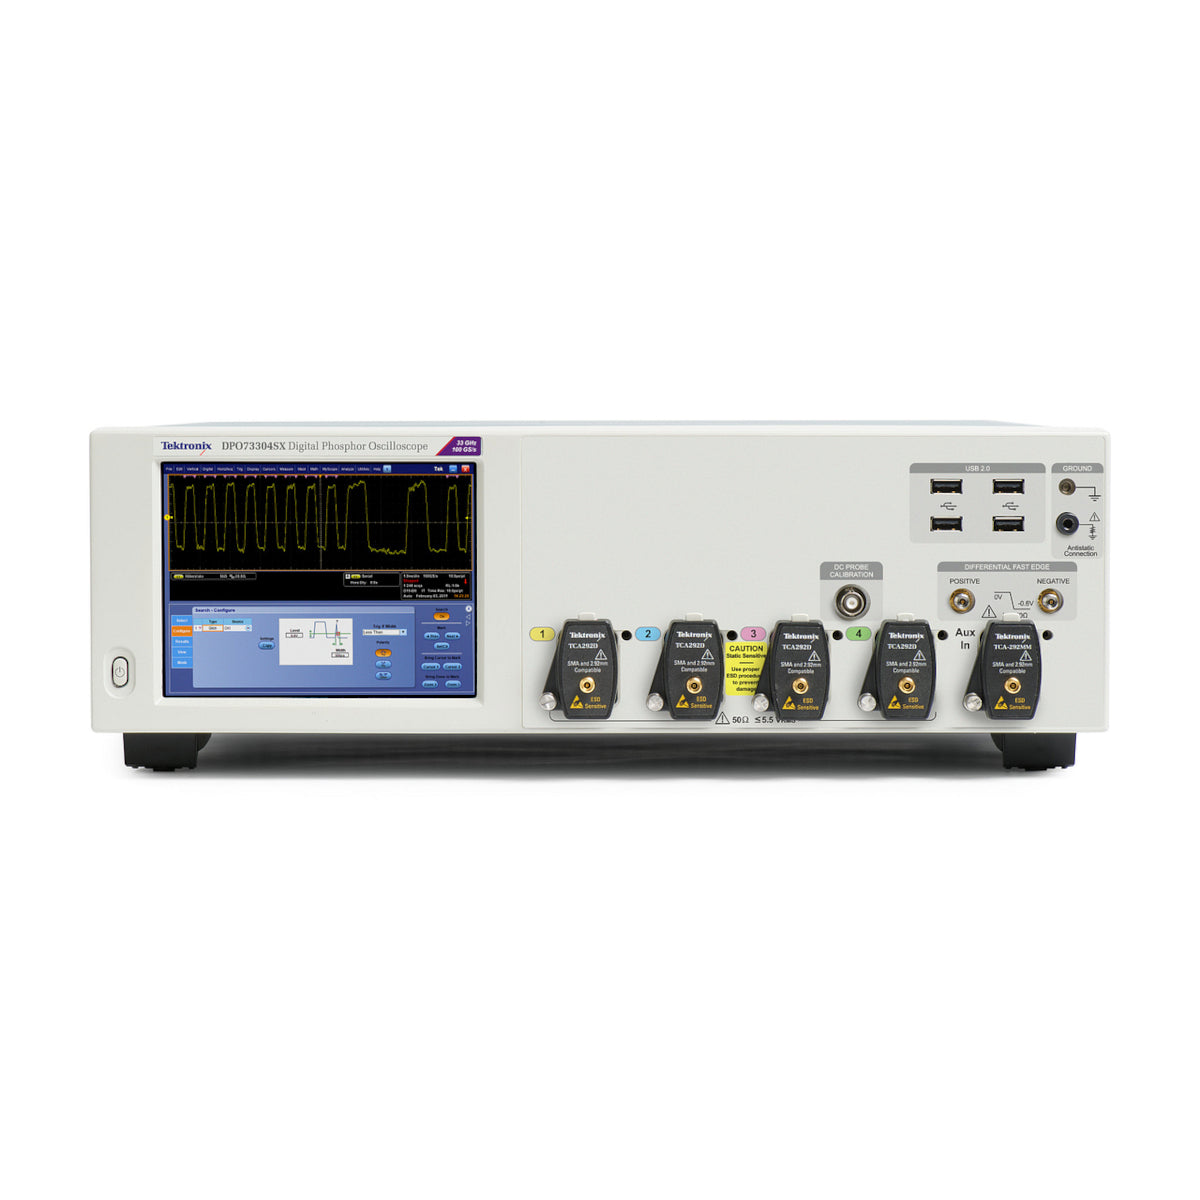 Tektronix DPO75002SX Scalable Performance Oscilloscope